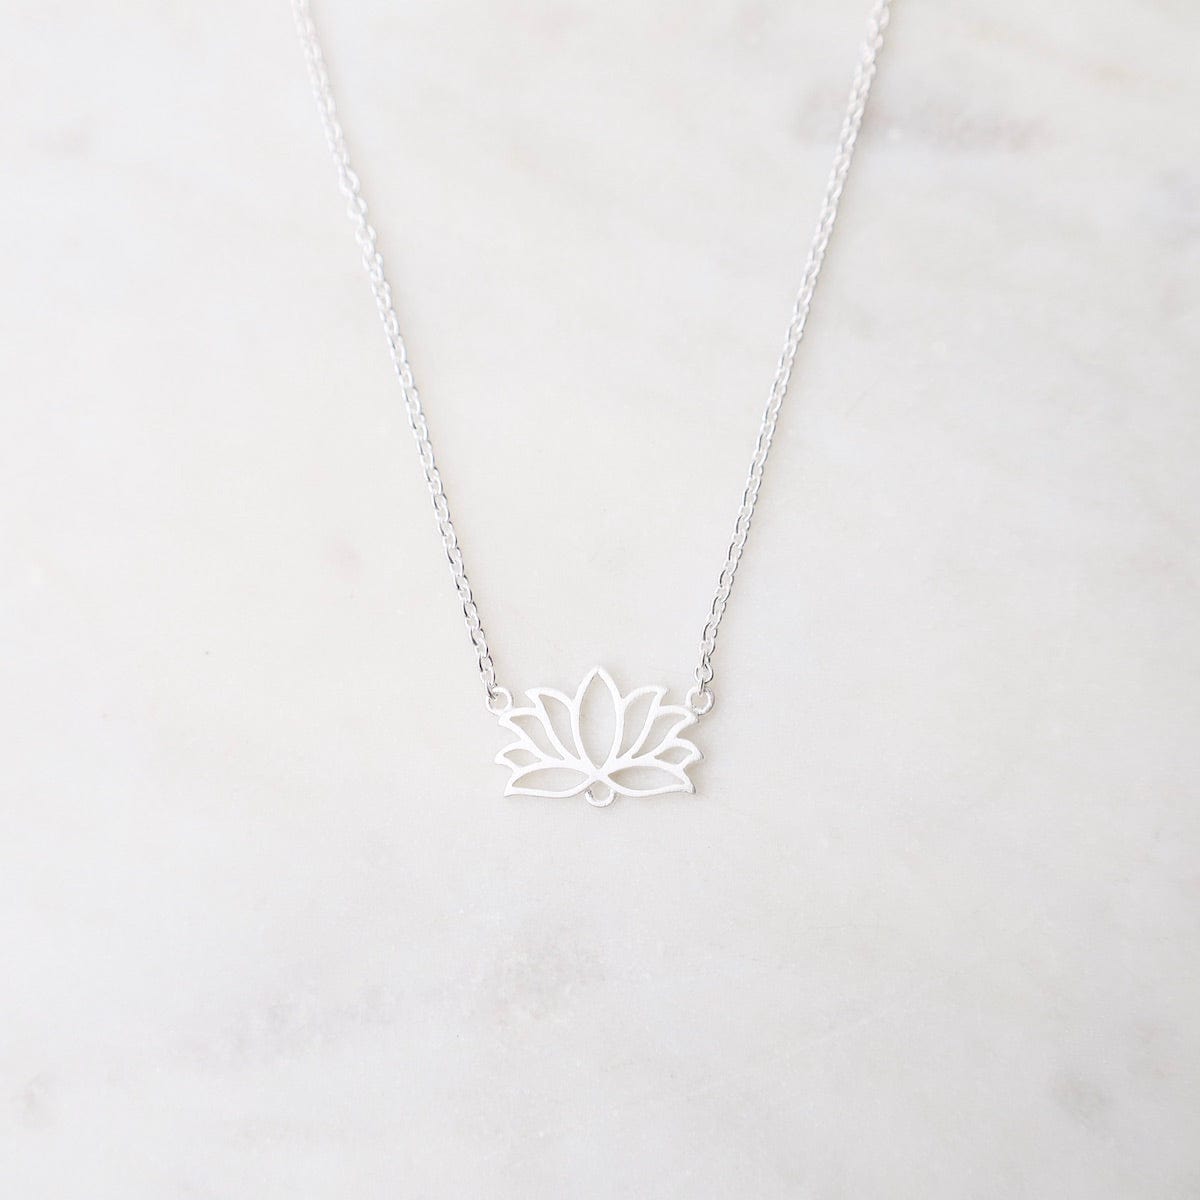 NKL Lotus Necklace – Brushed Sterling Silver